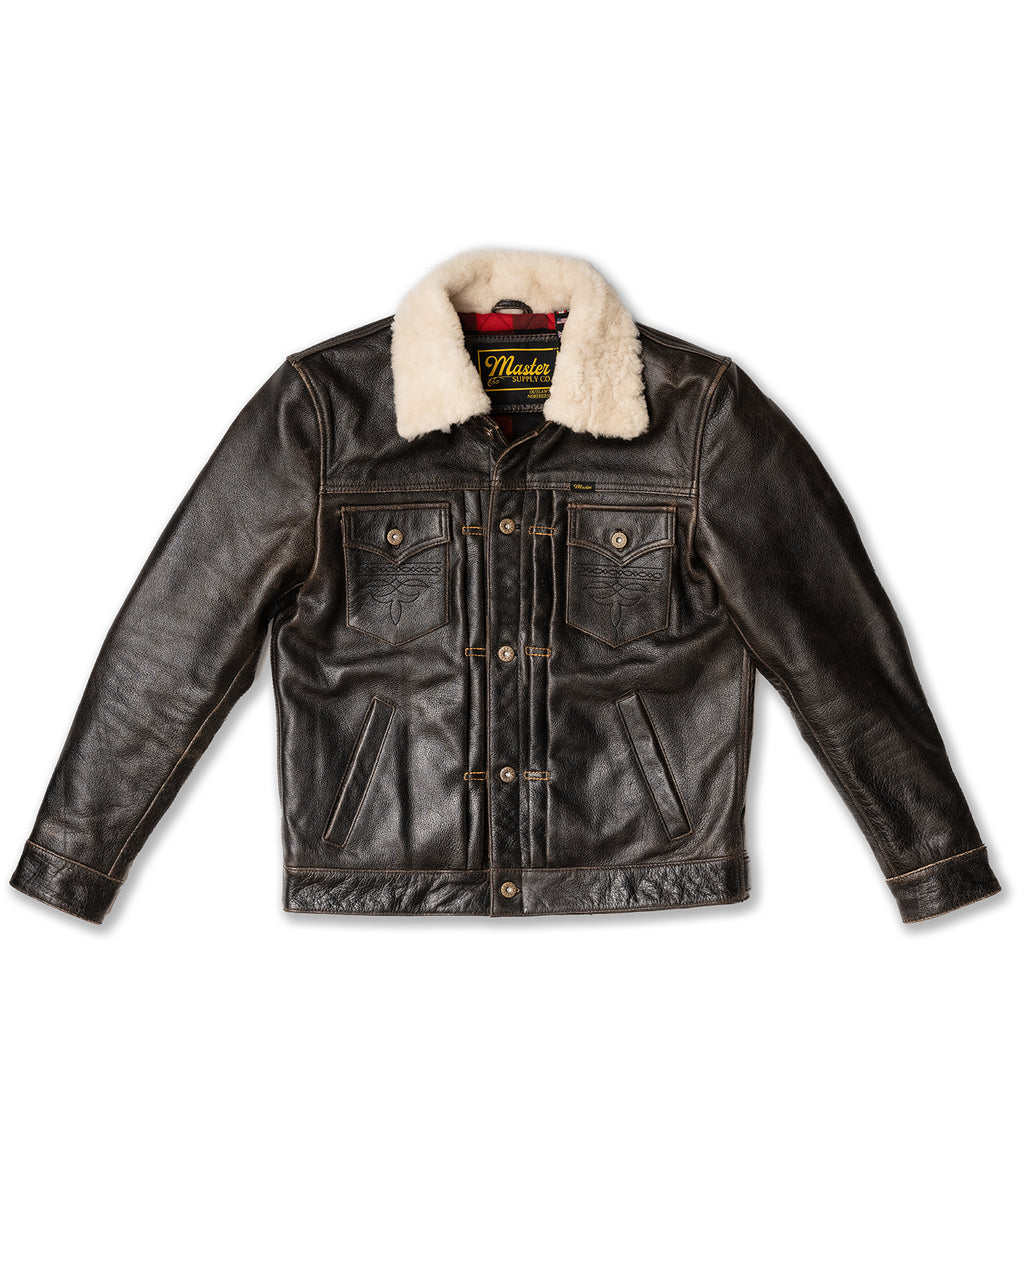 Mark-IV Anniversary Jacket | Leather Jacket by Master Supply Co.